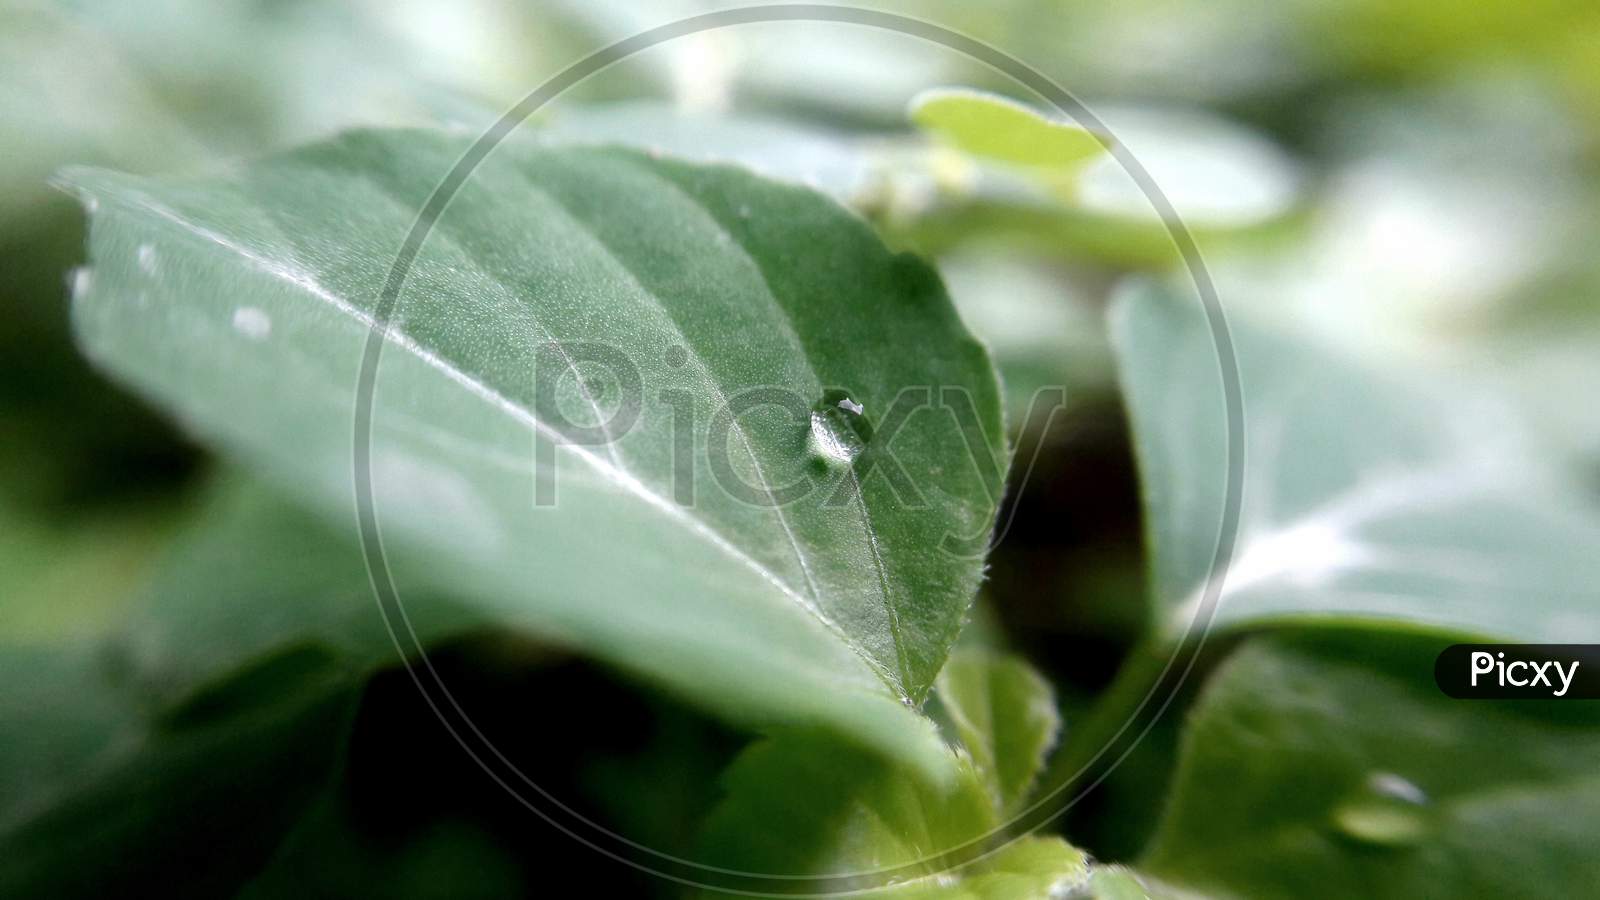 Rain Water Drops On Leaf macro